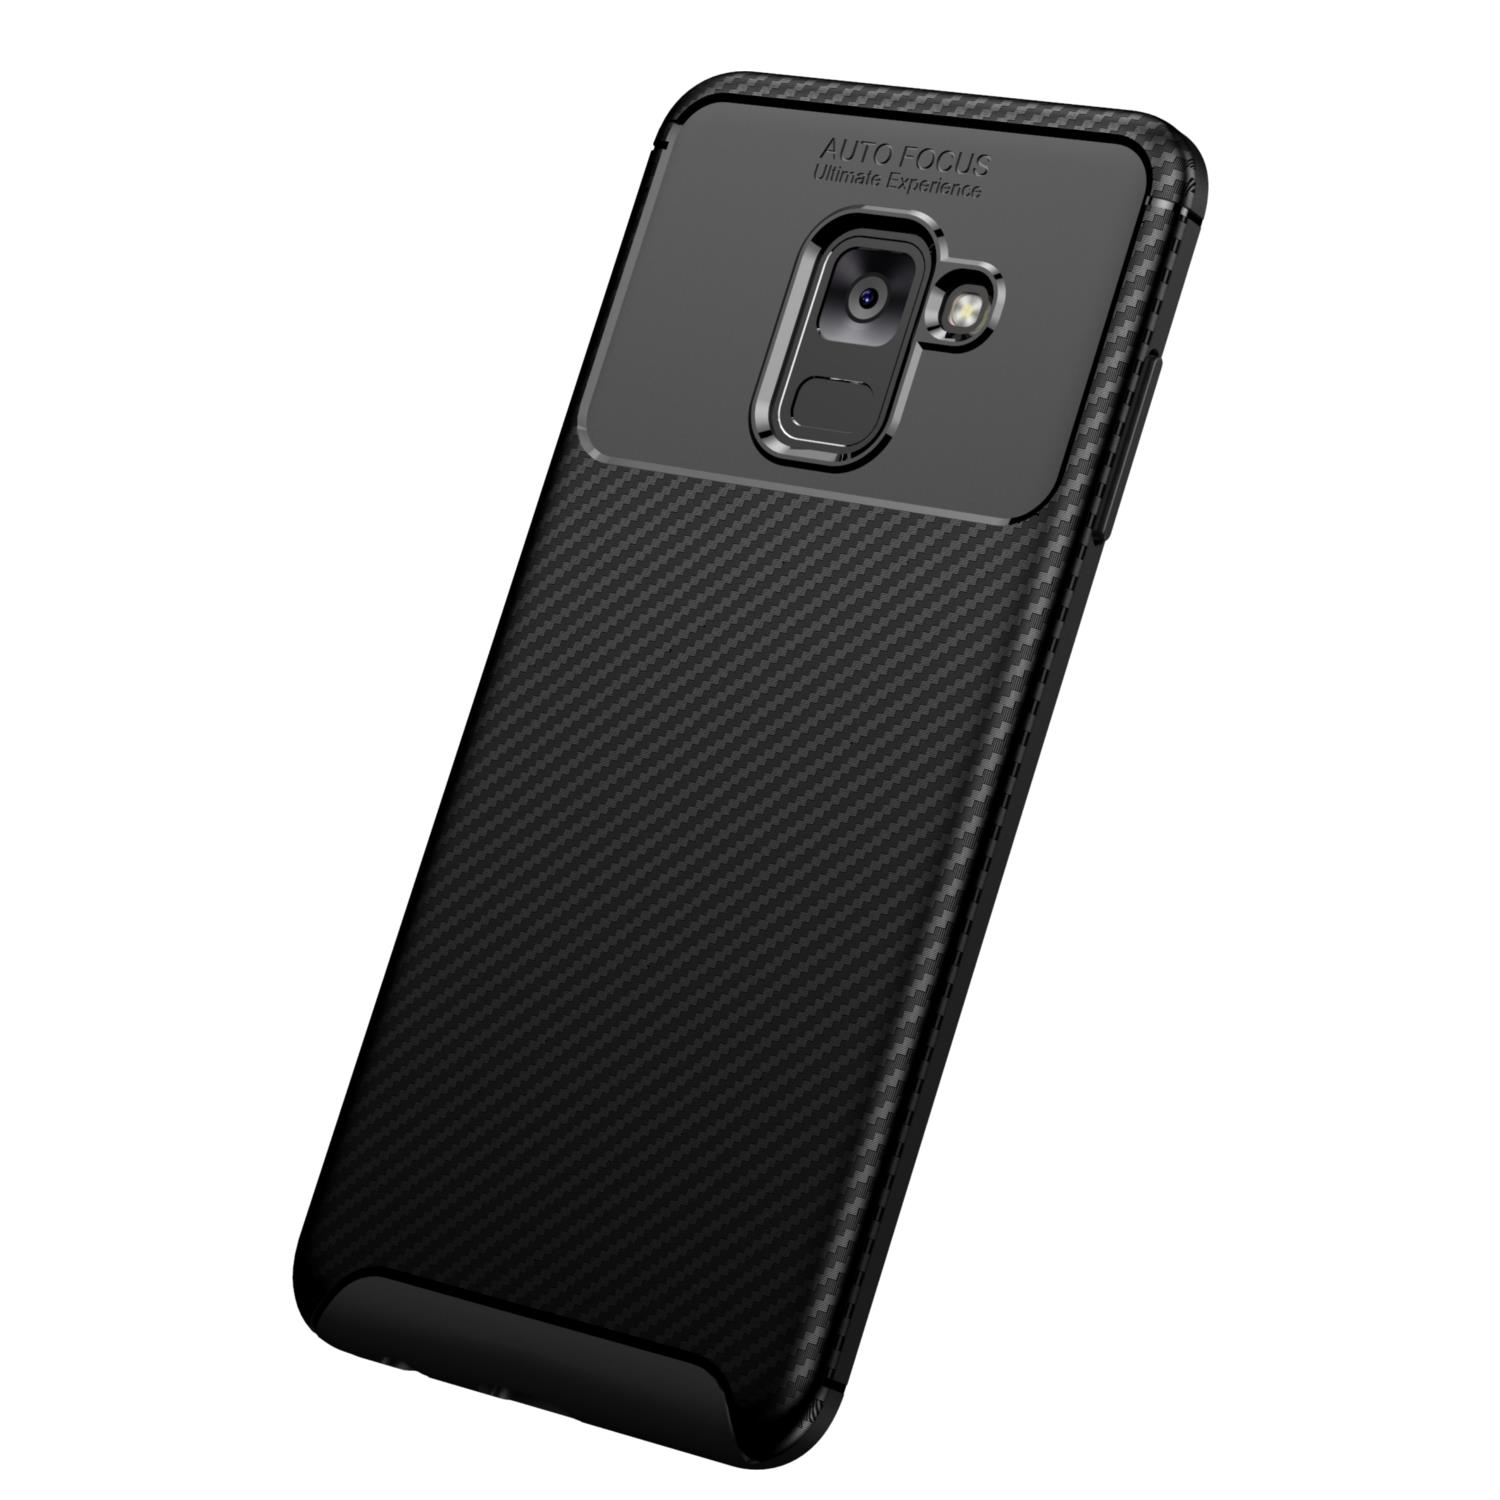 Bakeey-Protective-Case-For-iPhone-A8-2018-Slim-Carbon-Fiber-Fingerprint-Resistant-Soft-TPU-1361108-3